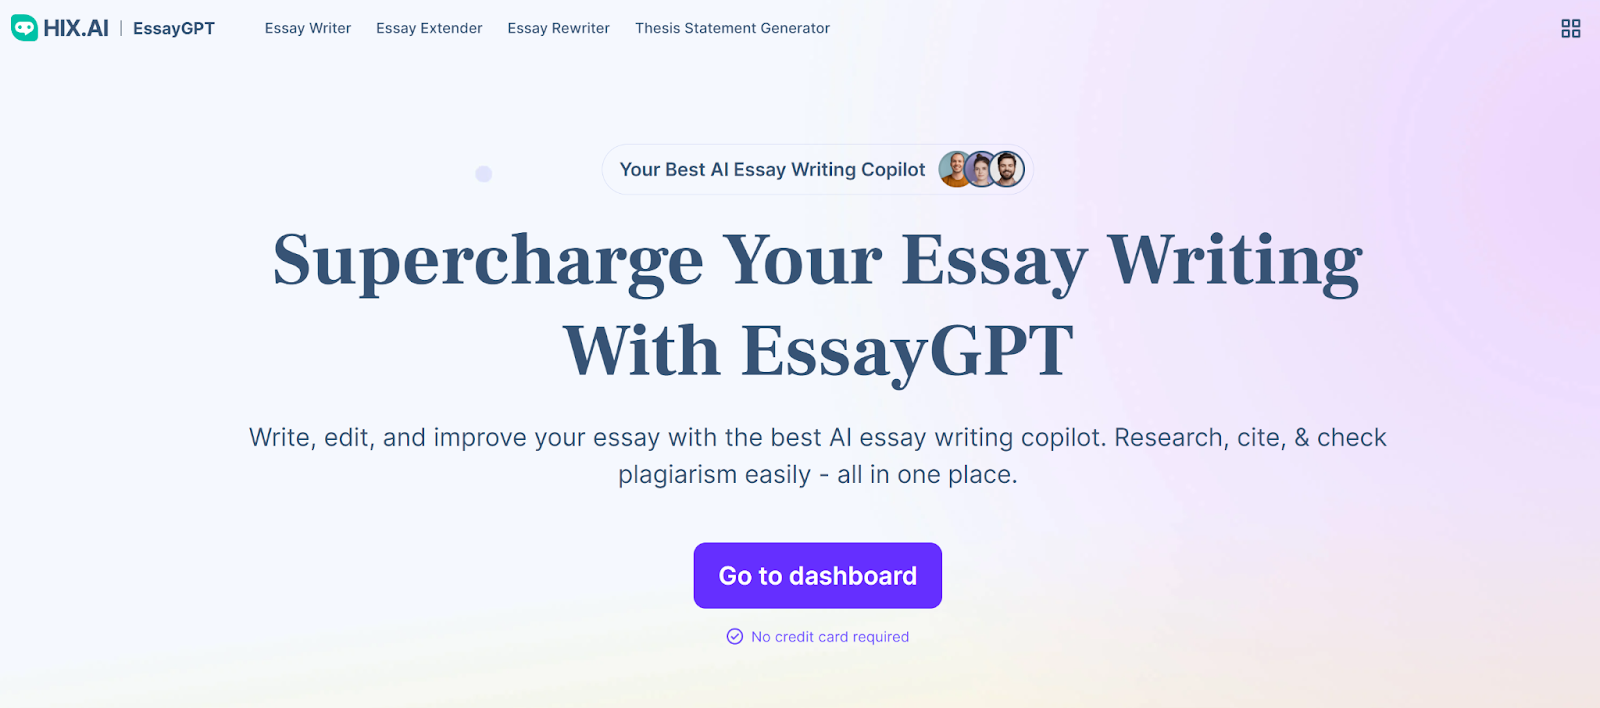 EssayGPT: Your Ultimate AI Essay Writing Copilot